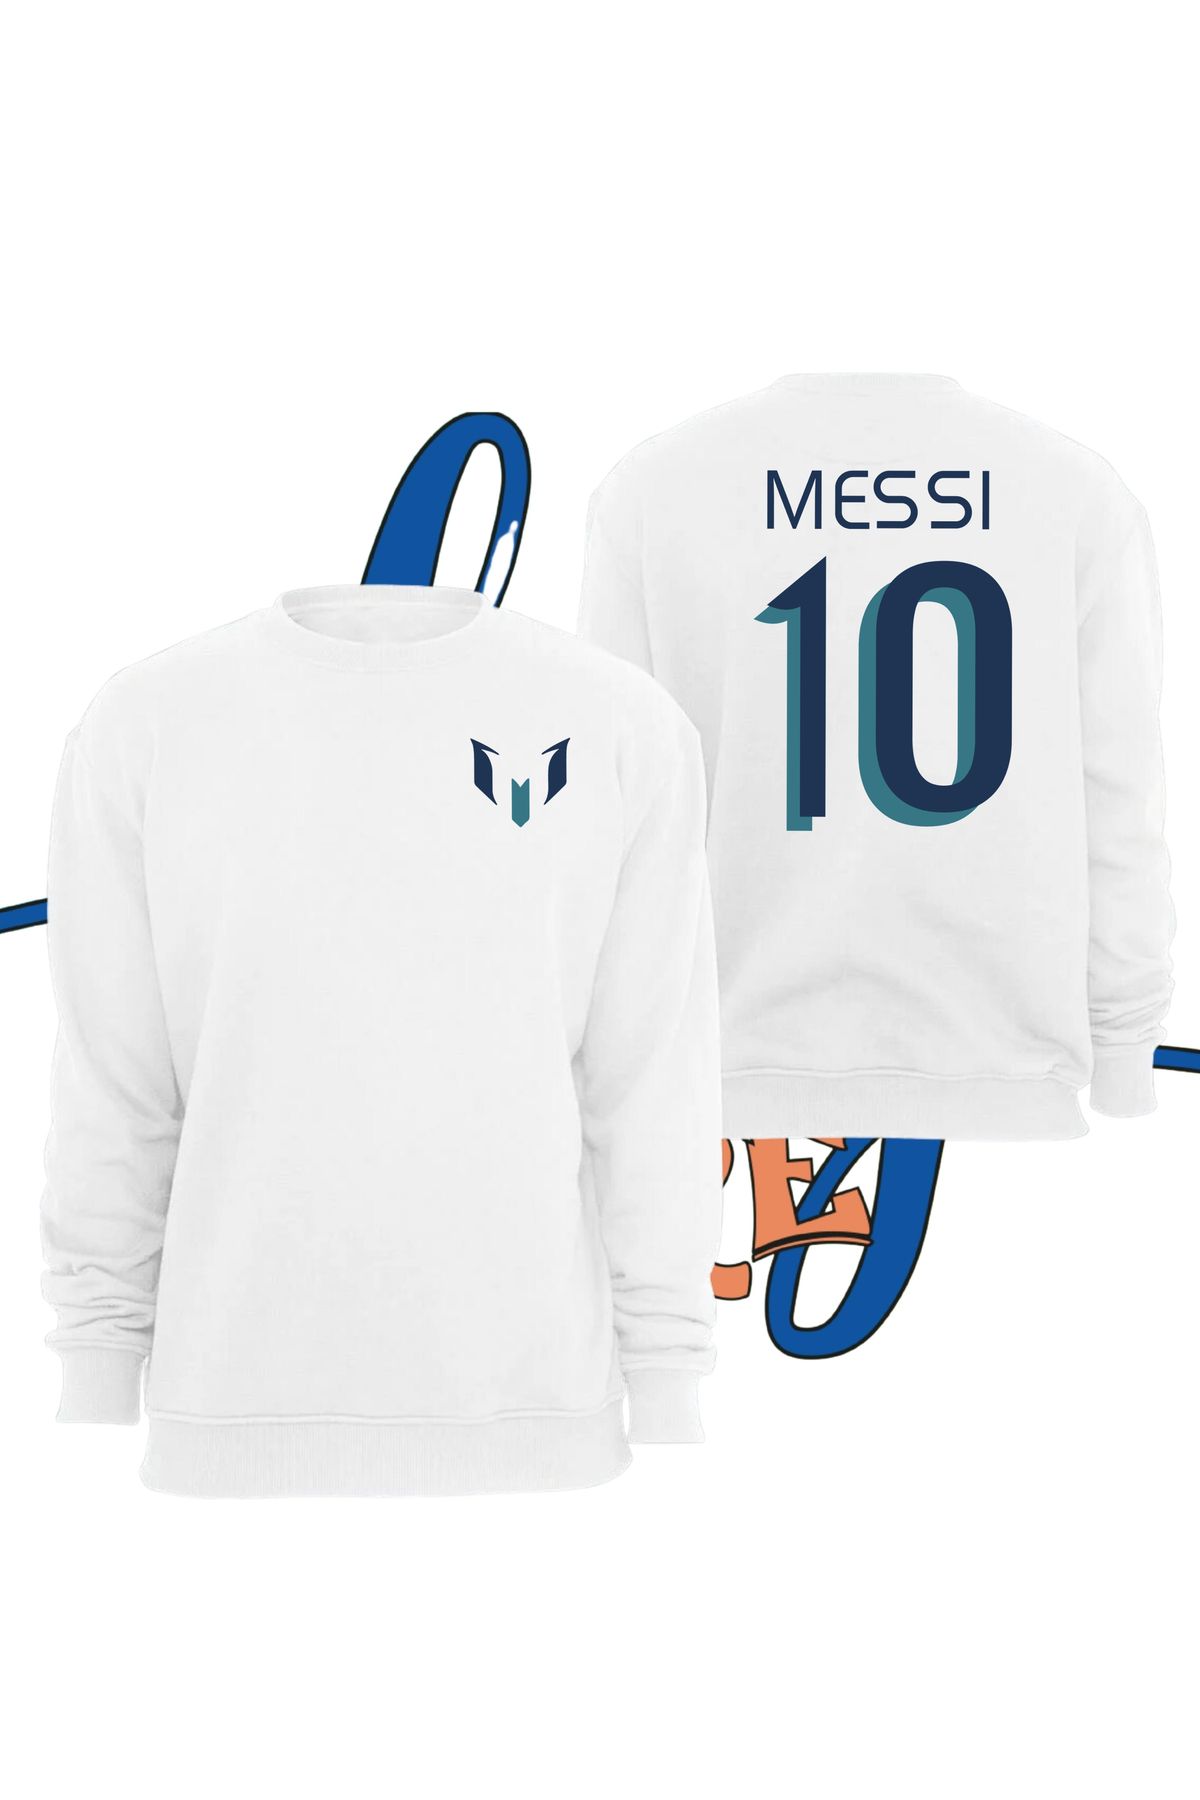 Biy Store Lionel Messi 10 numara forma futbol baskılı unisex bisiklet yaka spor sweatshirt